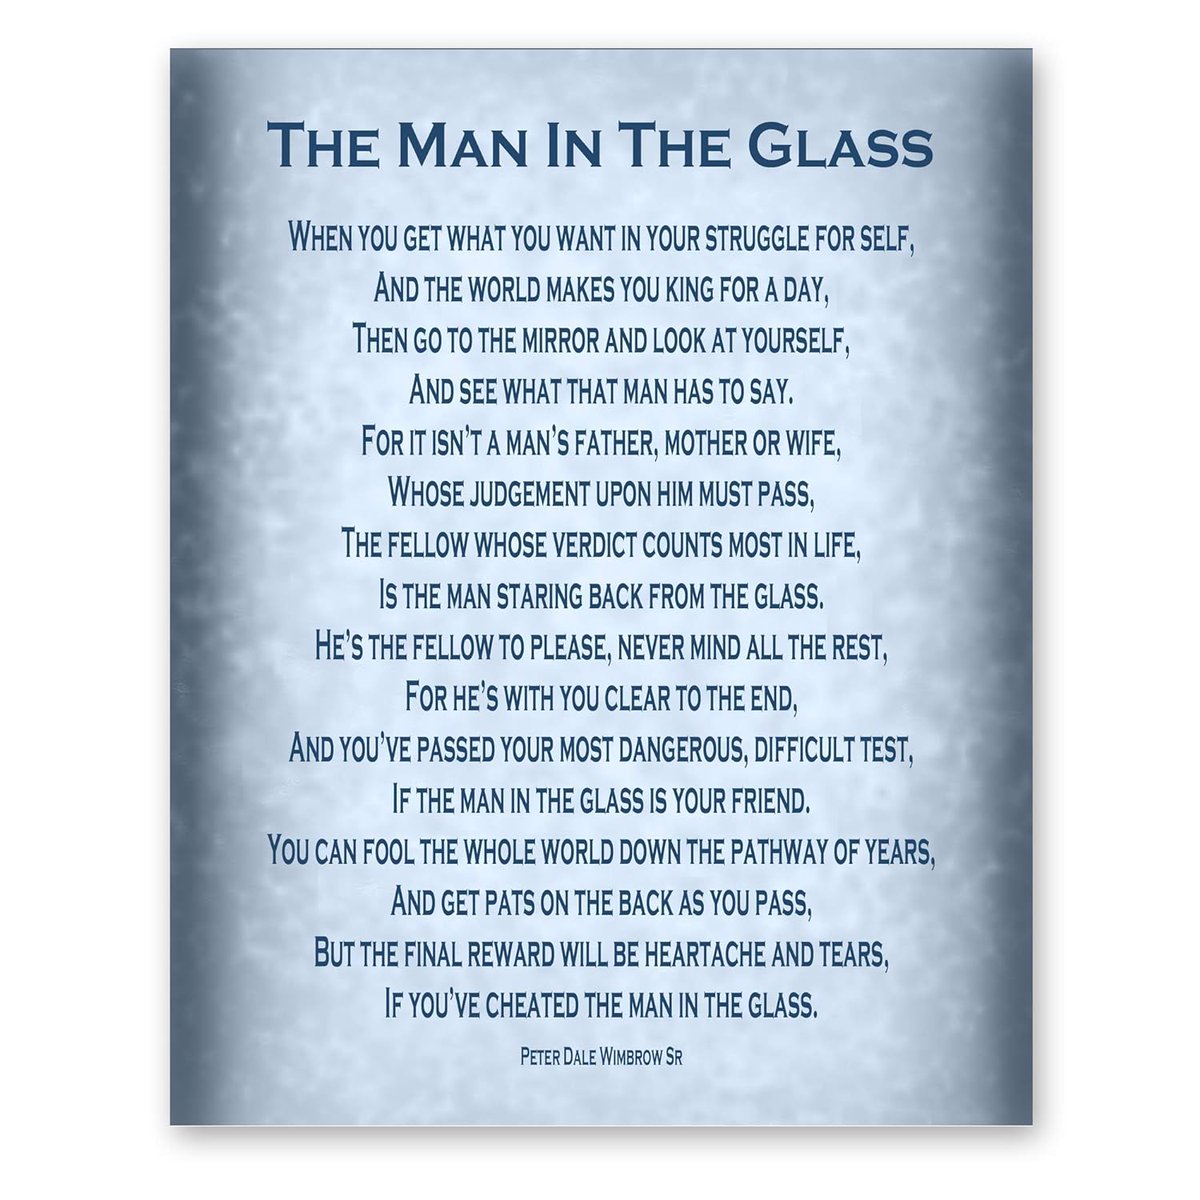 @JButing @ZellnerLaw 'The Man in the Glass' #KenKratz #StevenAvery #MakingAMurderer #Netflix #Mirror